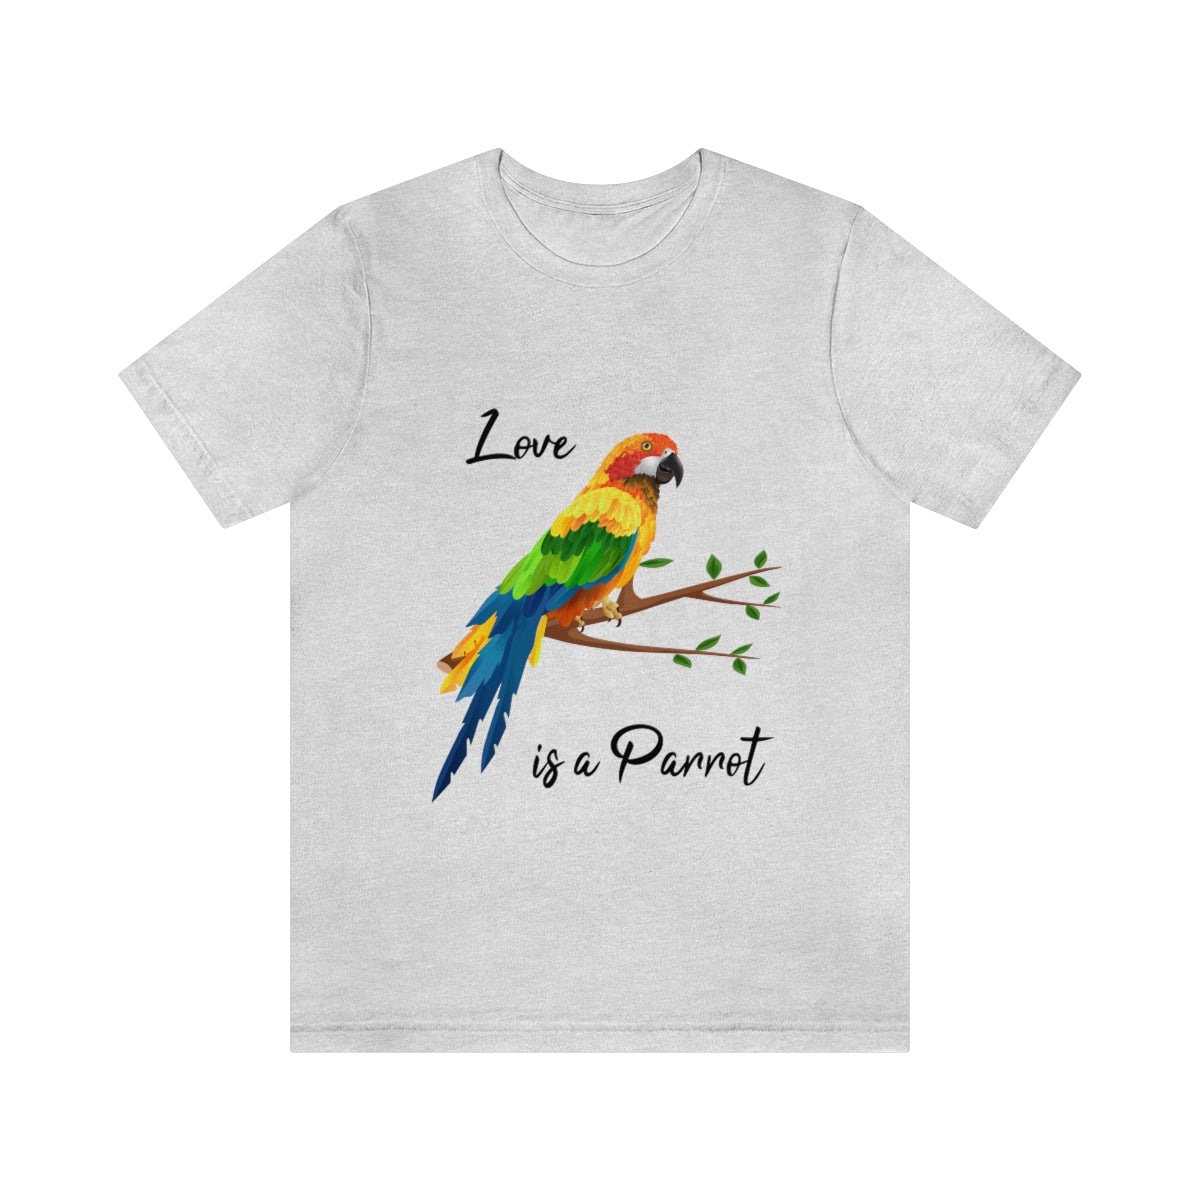 Love is Parrot - Jersey Short Sleeve Tee